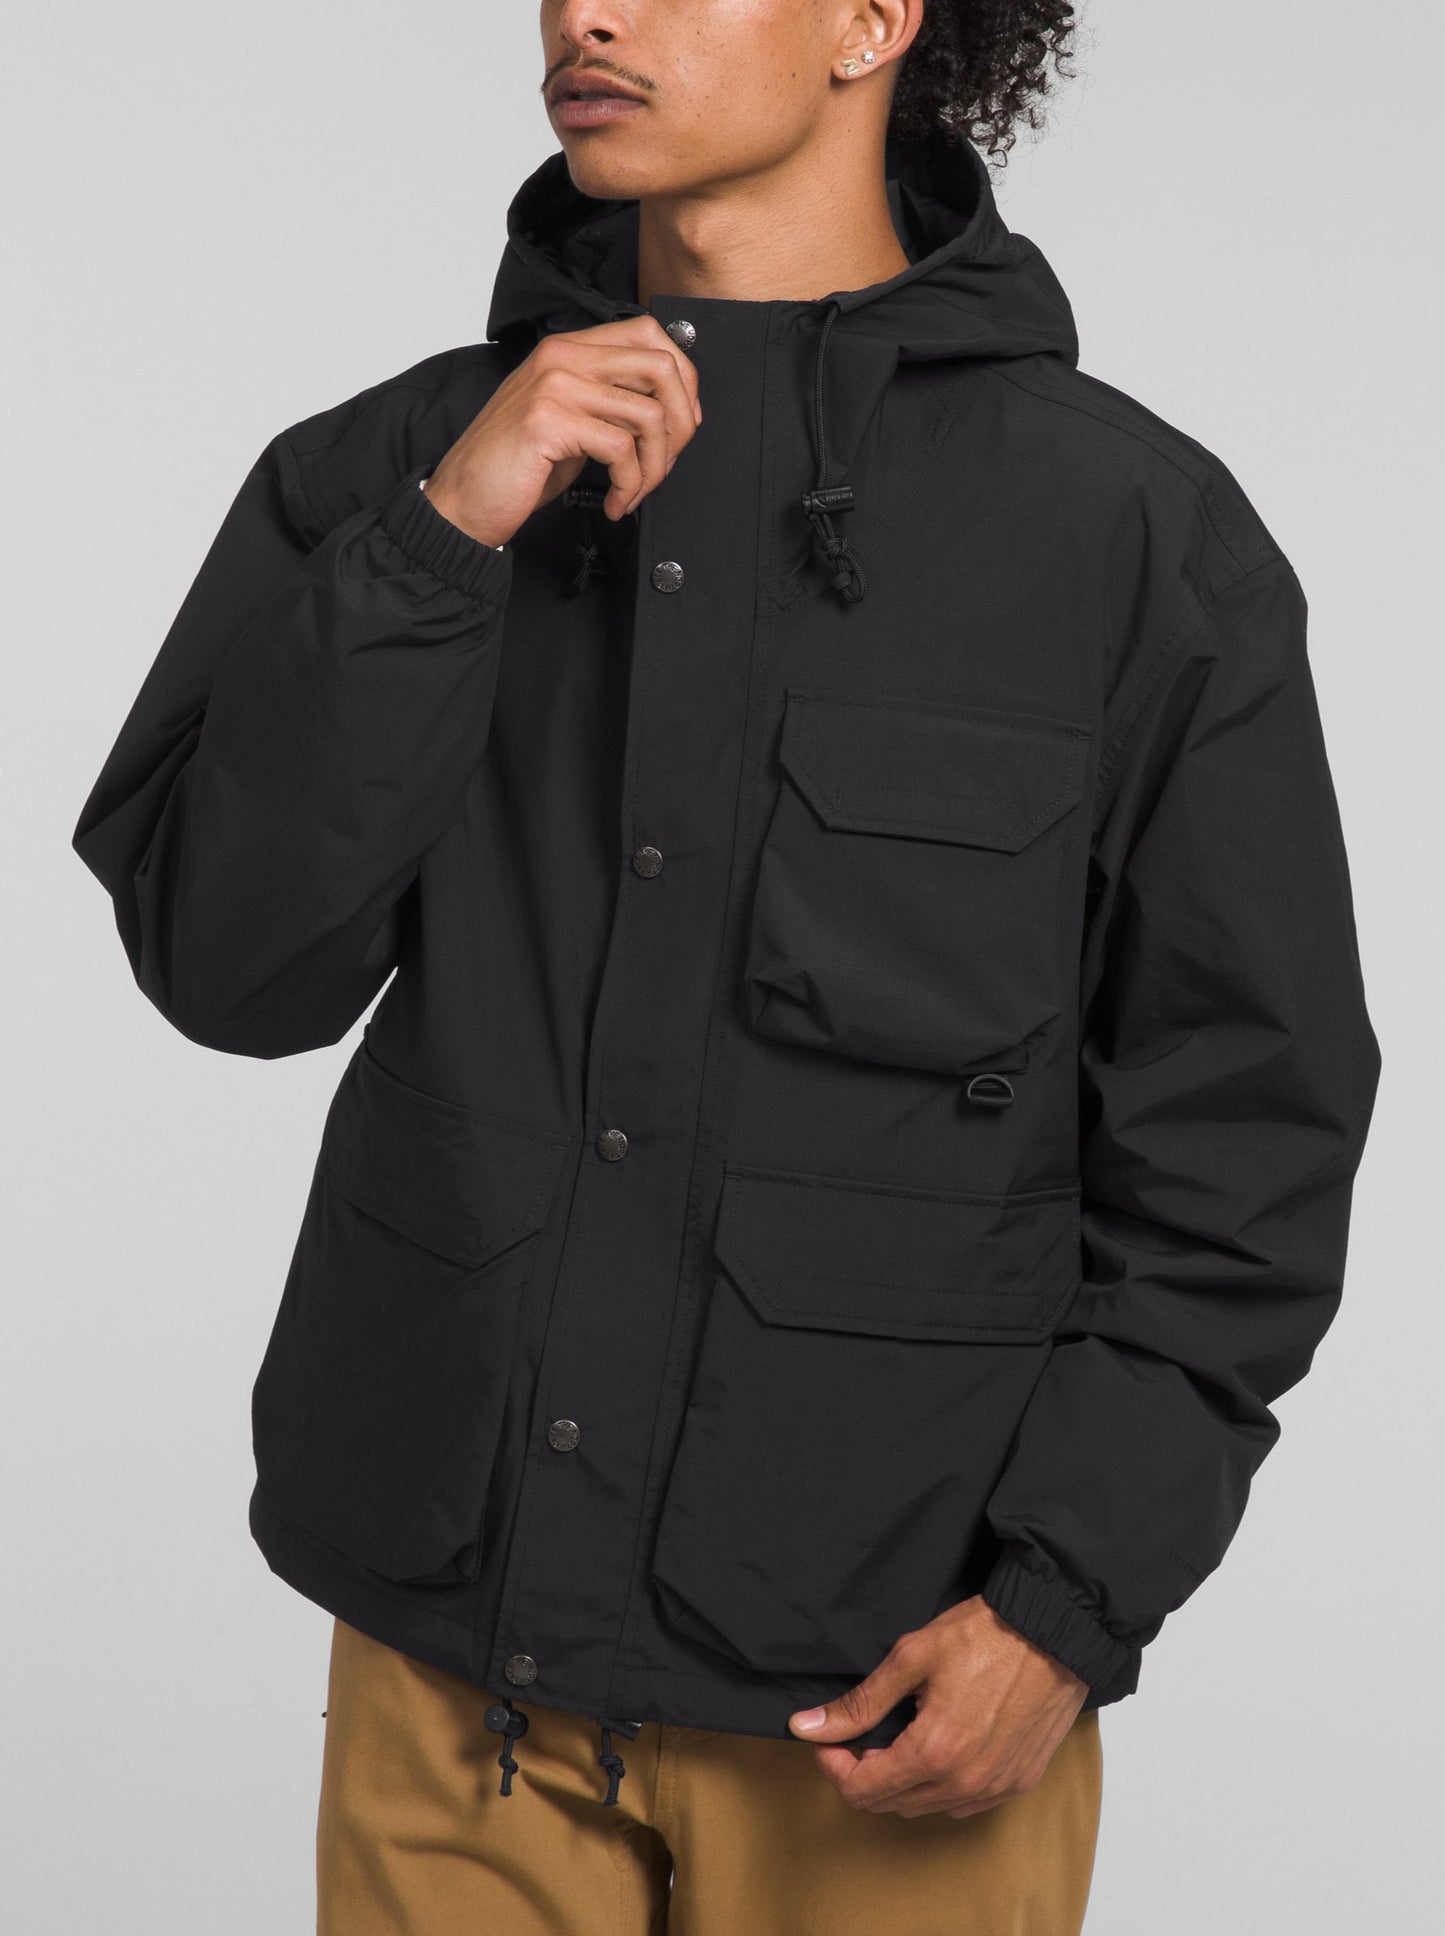 m jackets - THE NORTH FACE - M66 Utility Rain Jacket - PLENTY